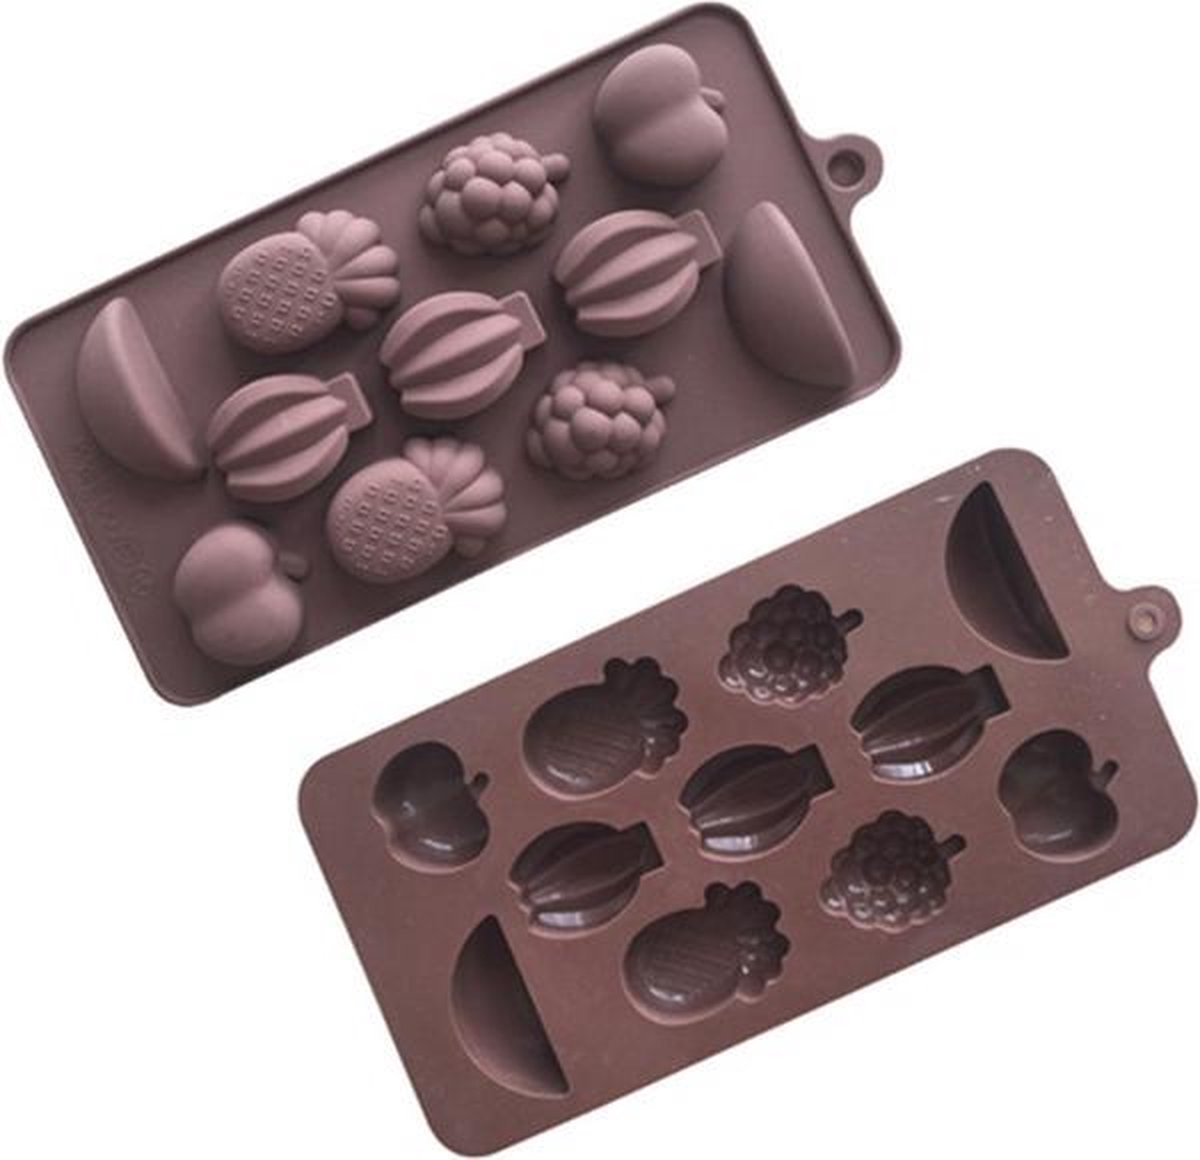 ProductGoods - Siliconen Bakvorm - Bonbonvorm - Chocoladevorm - Fruitsoorten - 11 stuks - Bakvormen